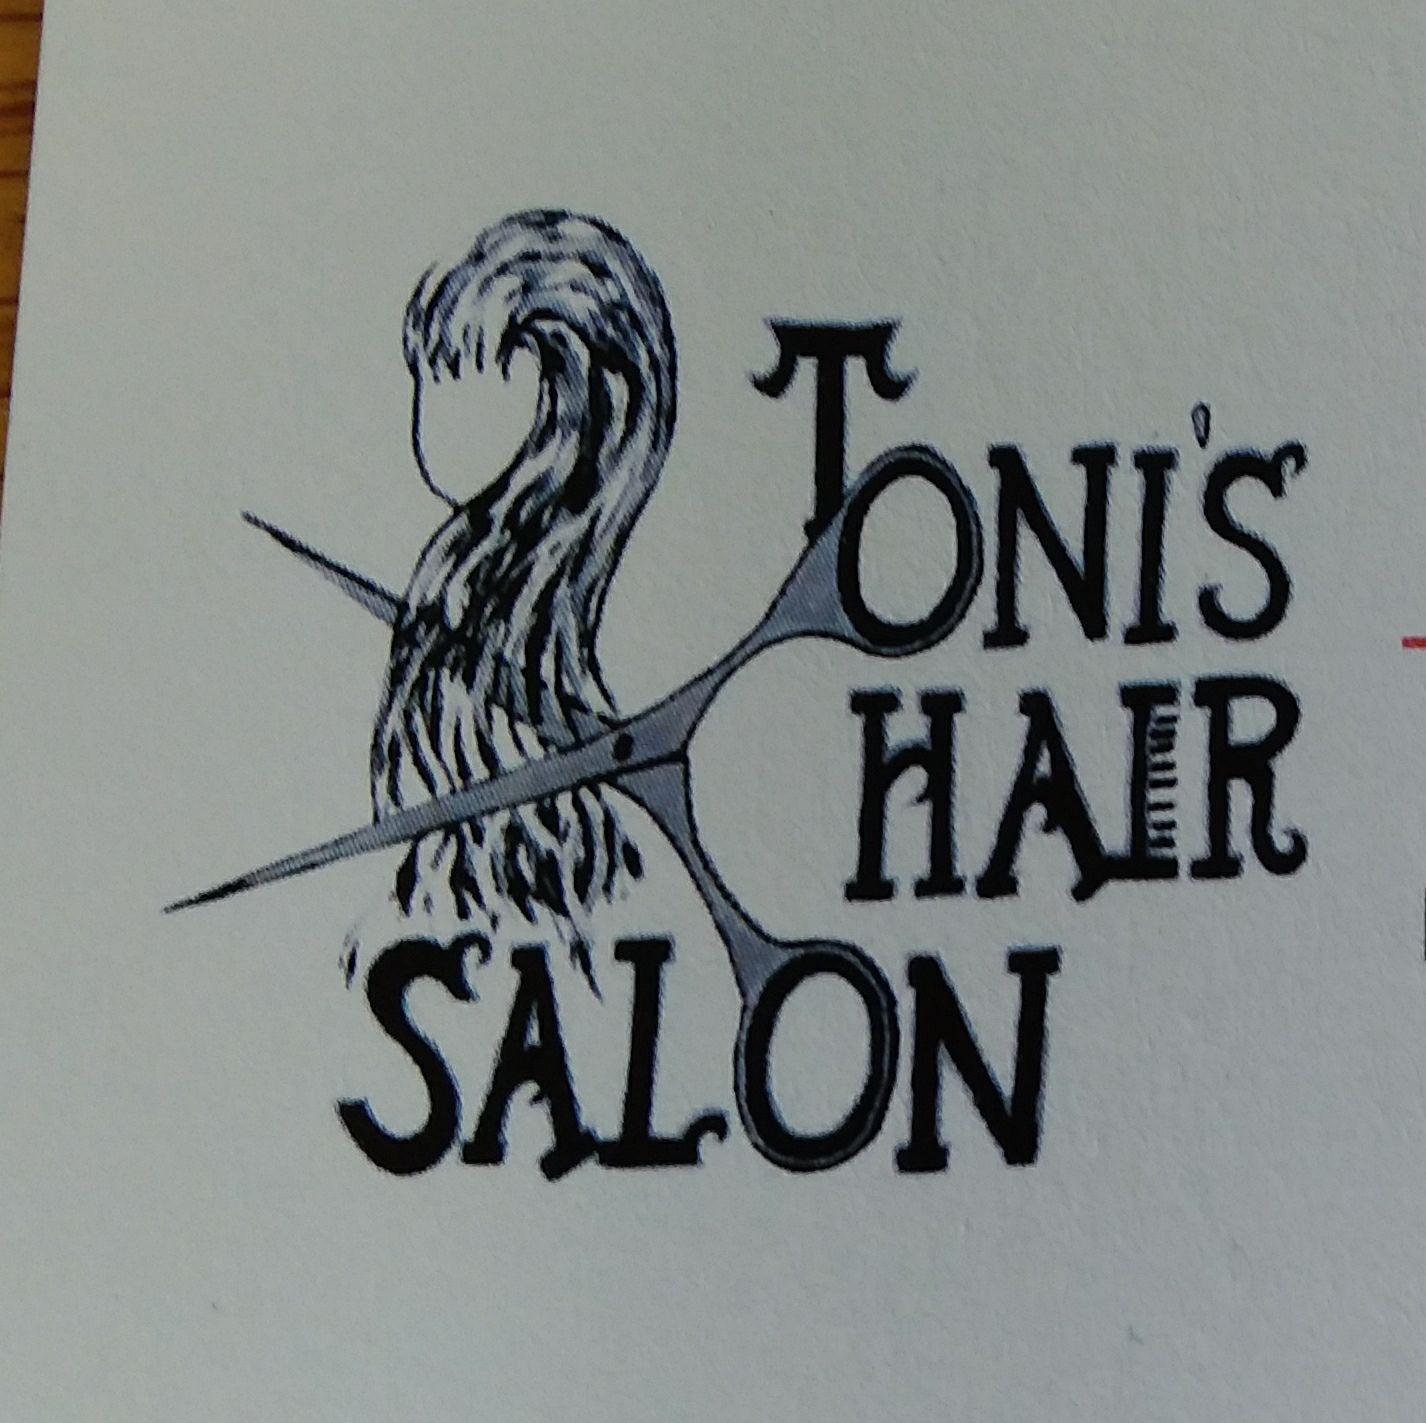 Toni's Hair Salon 450 N Juniata St #4, Havre De Grace Maryland 21078